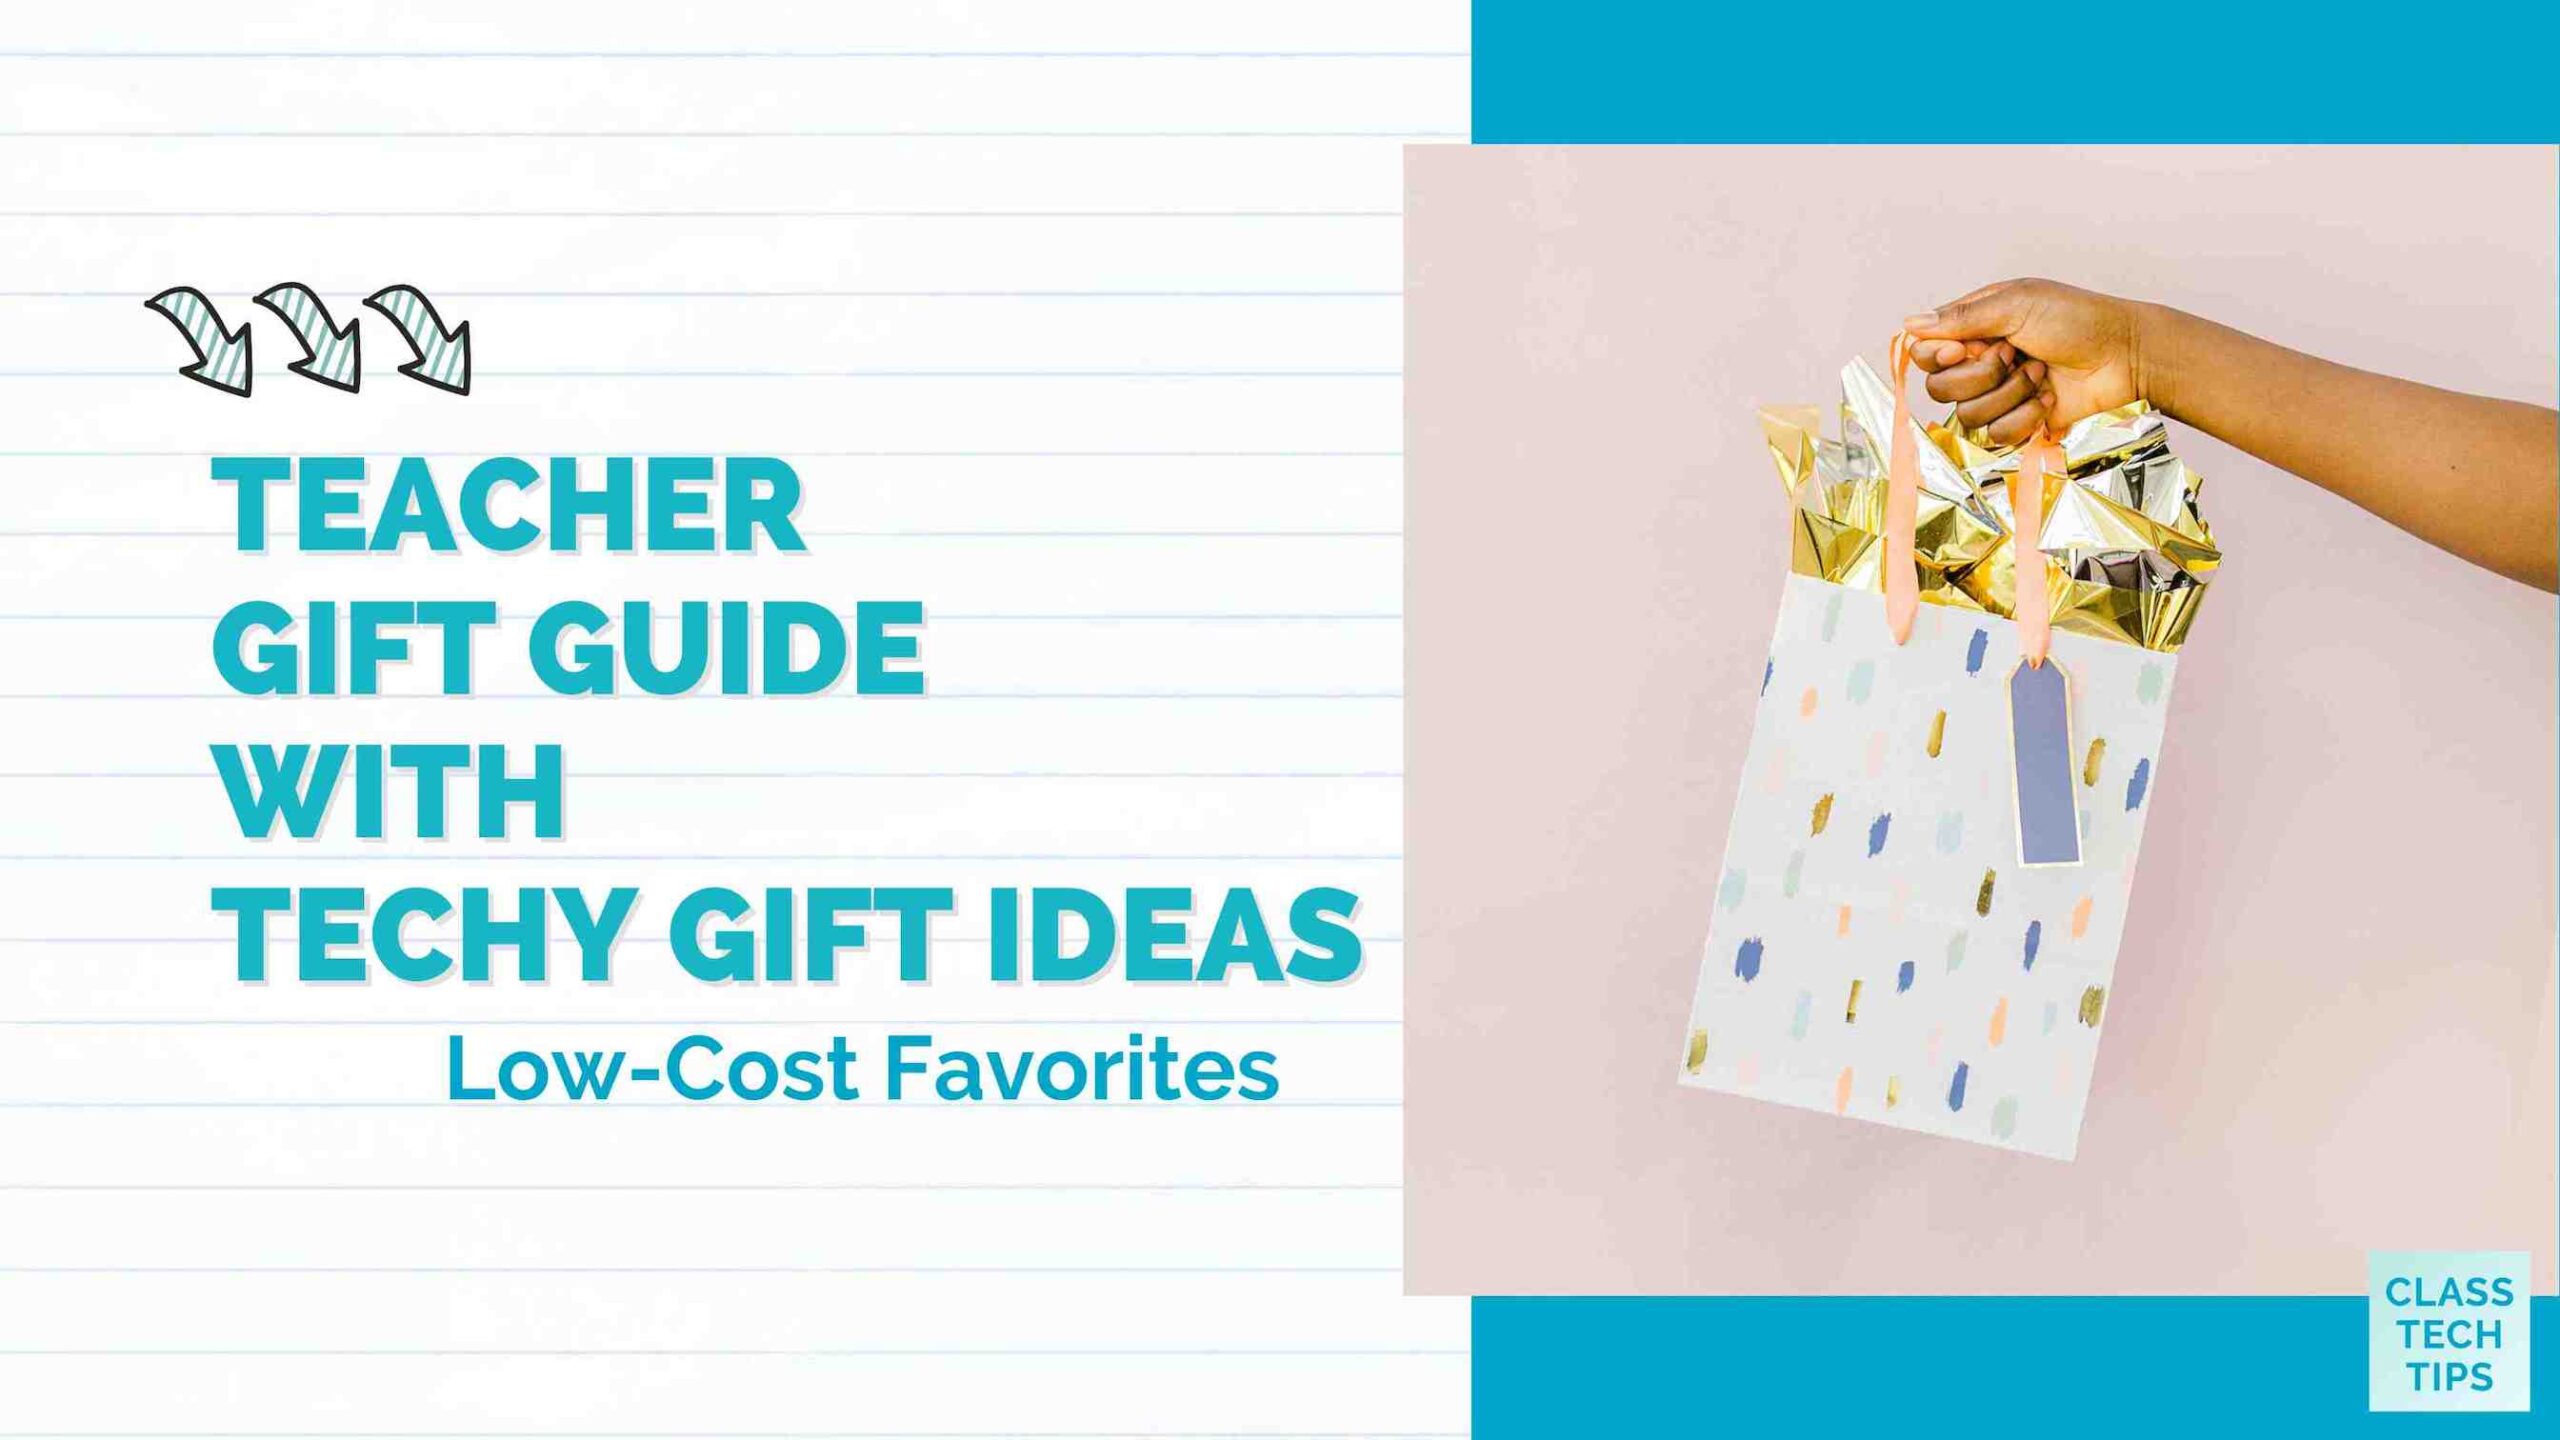 https://classtechtips.com/wp-content/uploads/2022/11/Teacher-Gift-Guide-with-Techy-Gift-Ideas-2-scaled.jpg